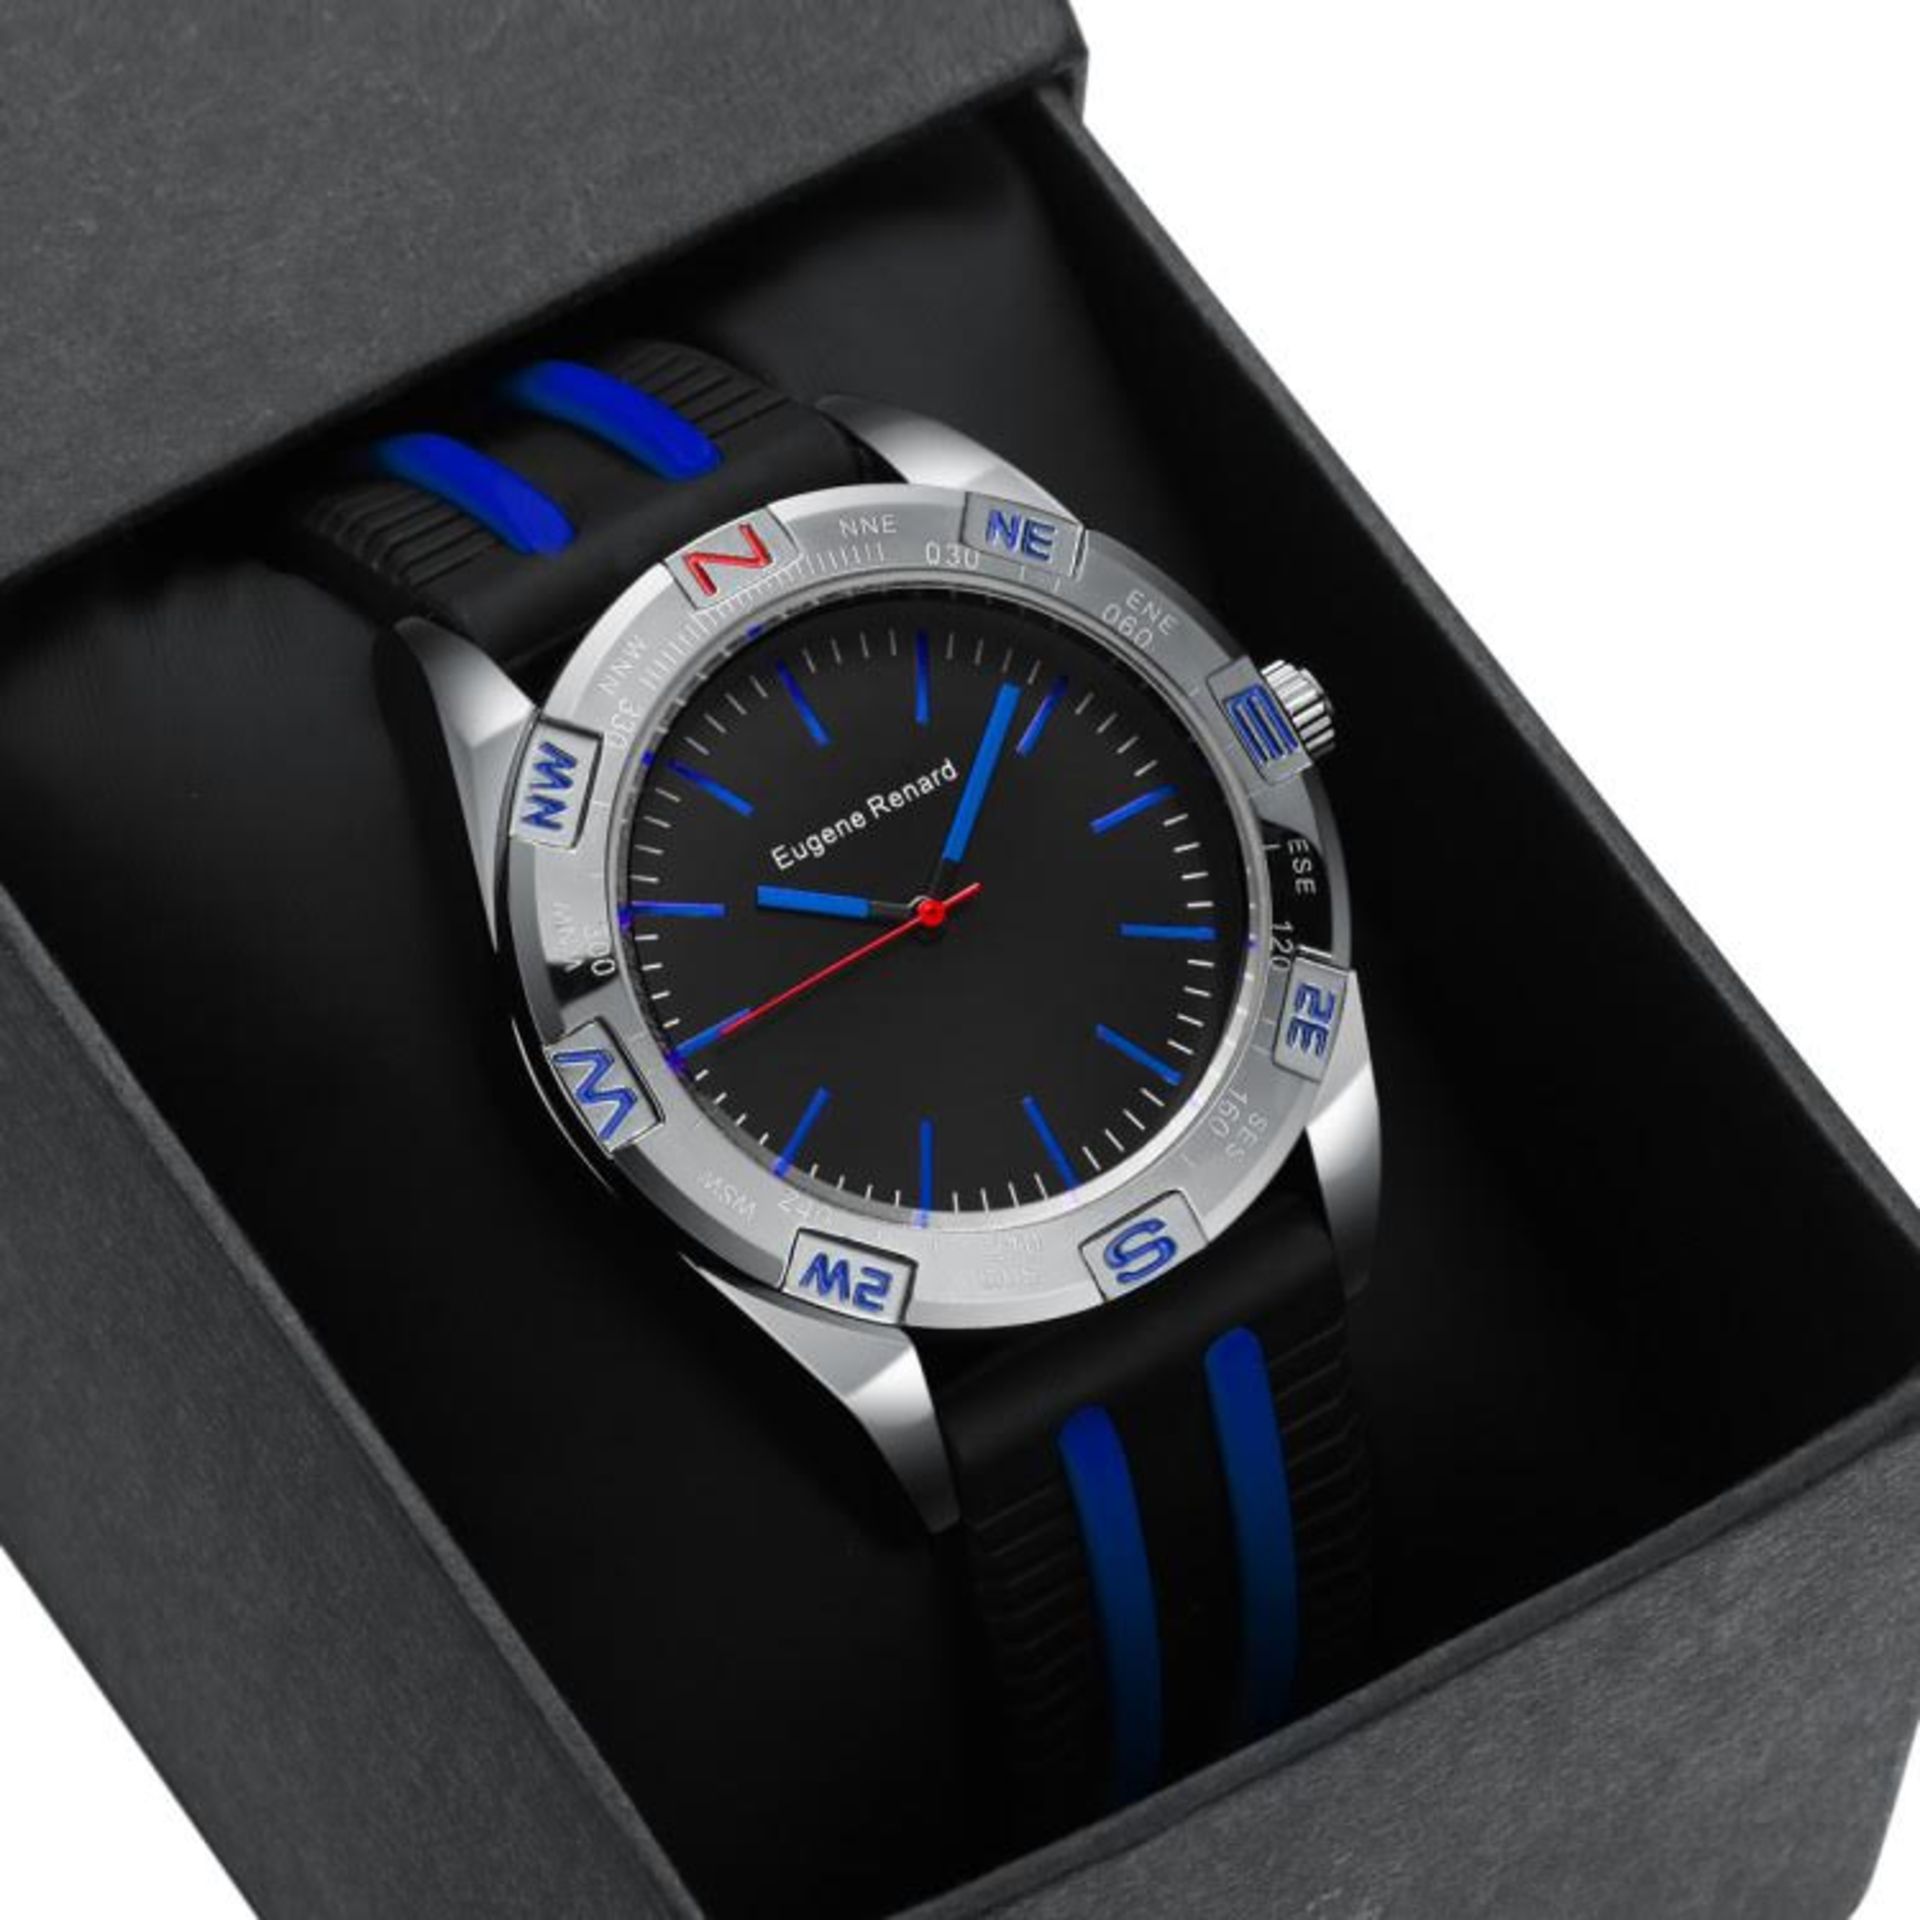 V *TRADE QTY* Brand New Gents Eugene Renard Timepiece Model X - Black Face - Blue Indices - Blue/